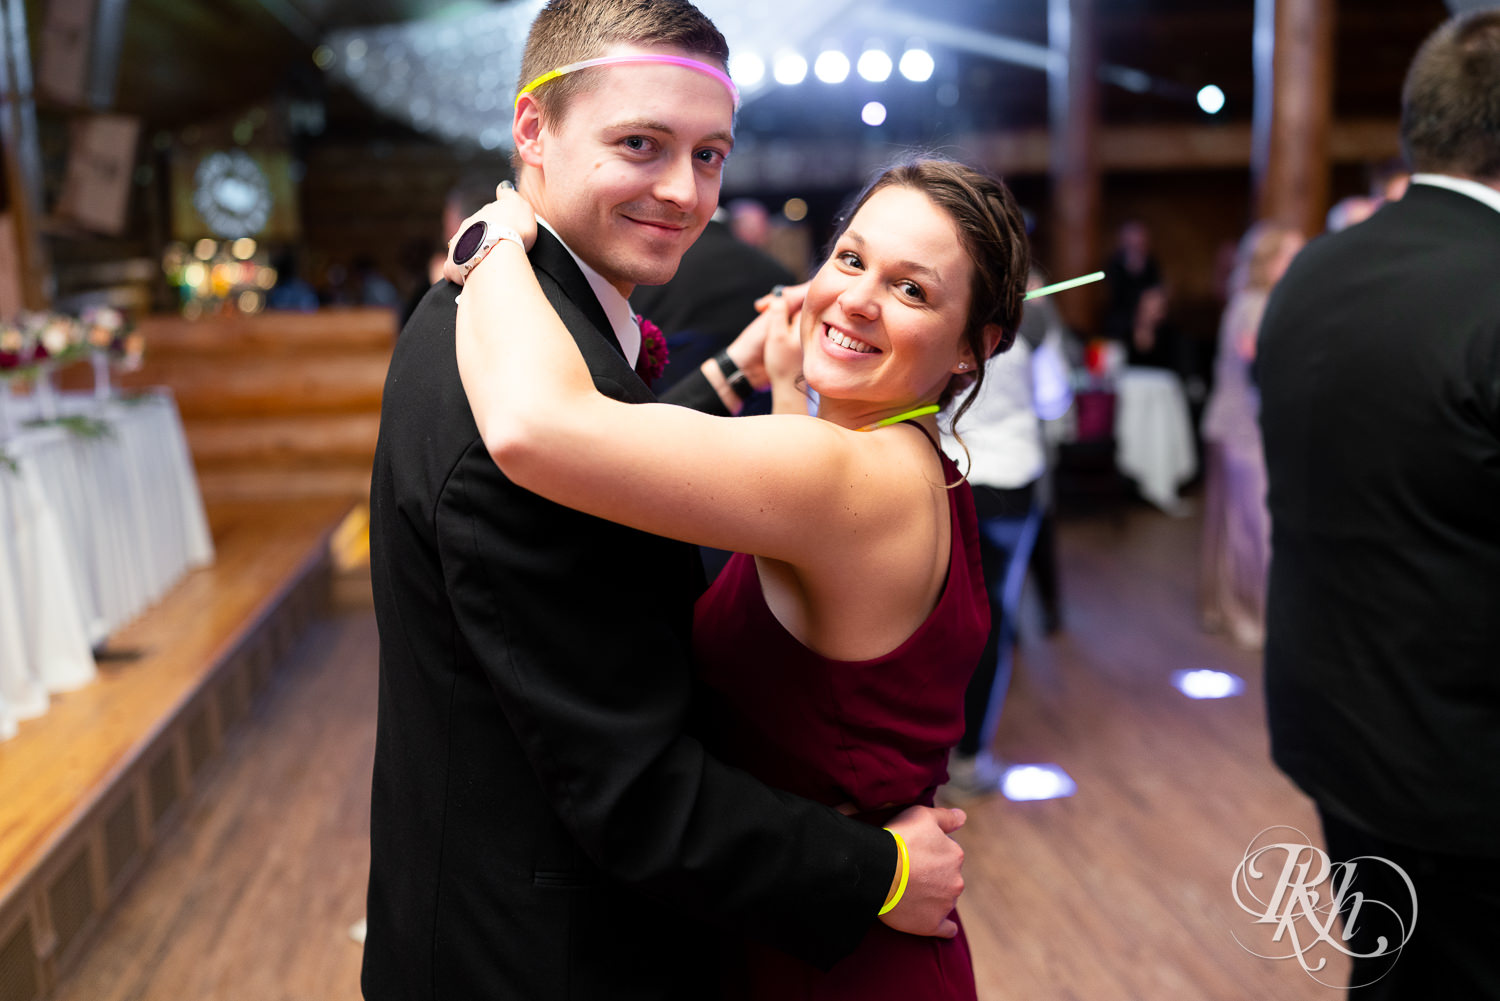 Guests dance at wedding reception at Glenhaven Events in Farmington, Minnesota.